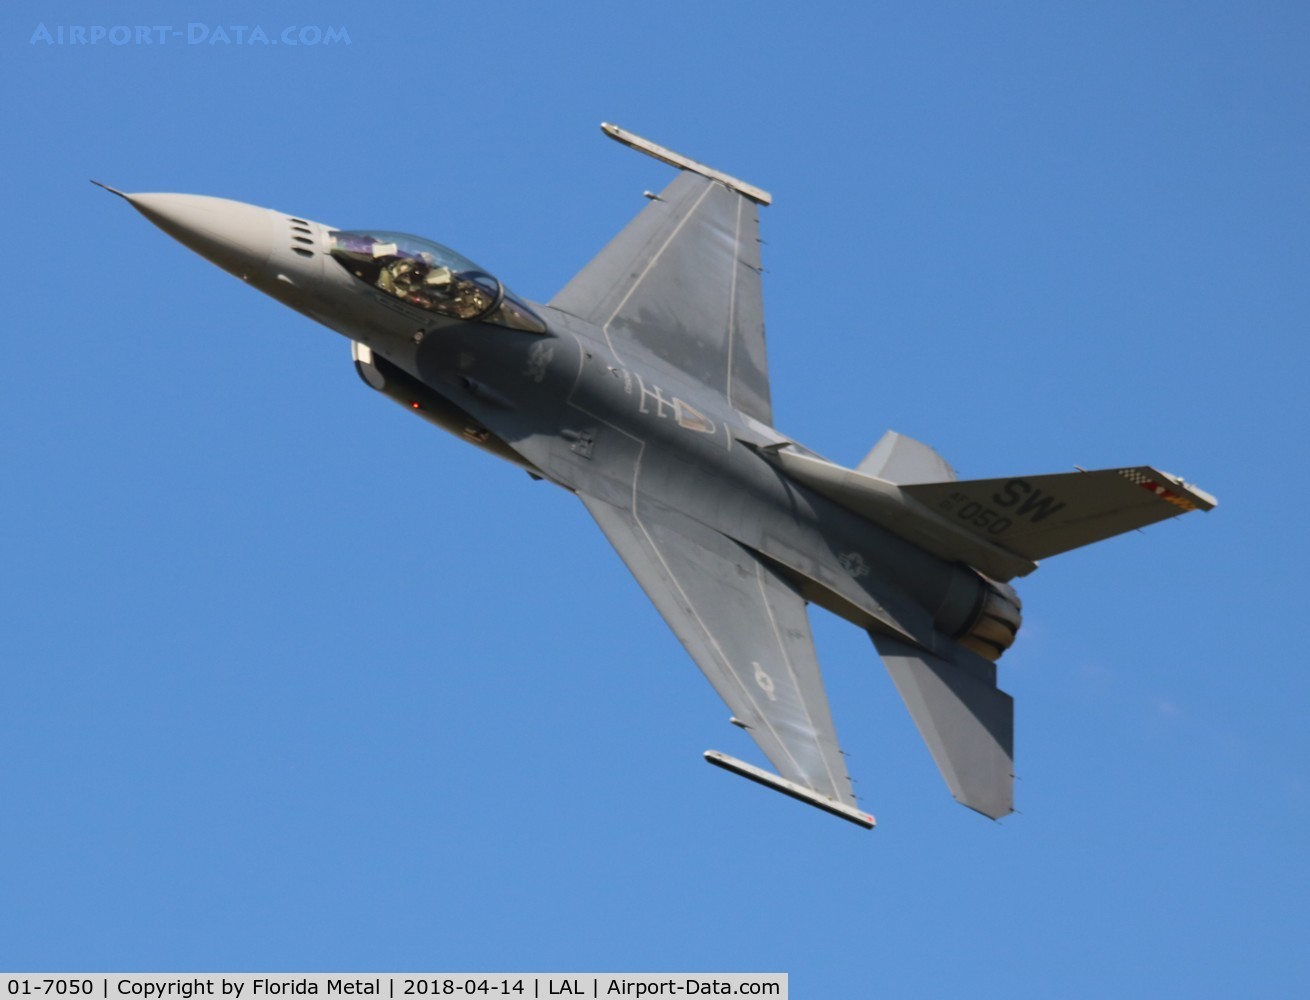 01-7050, 2001 Lockheed Martin F-16CJ Fighting Falcon C/N CC-228, F-16CJ